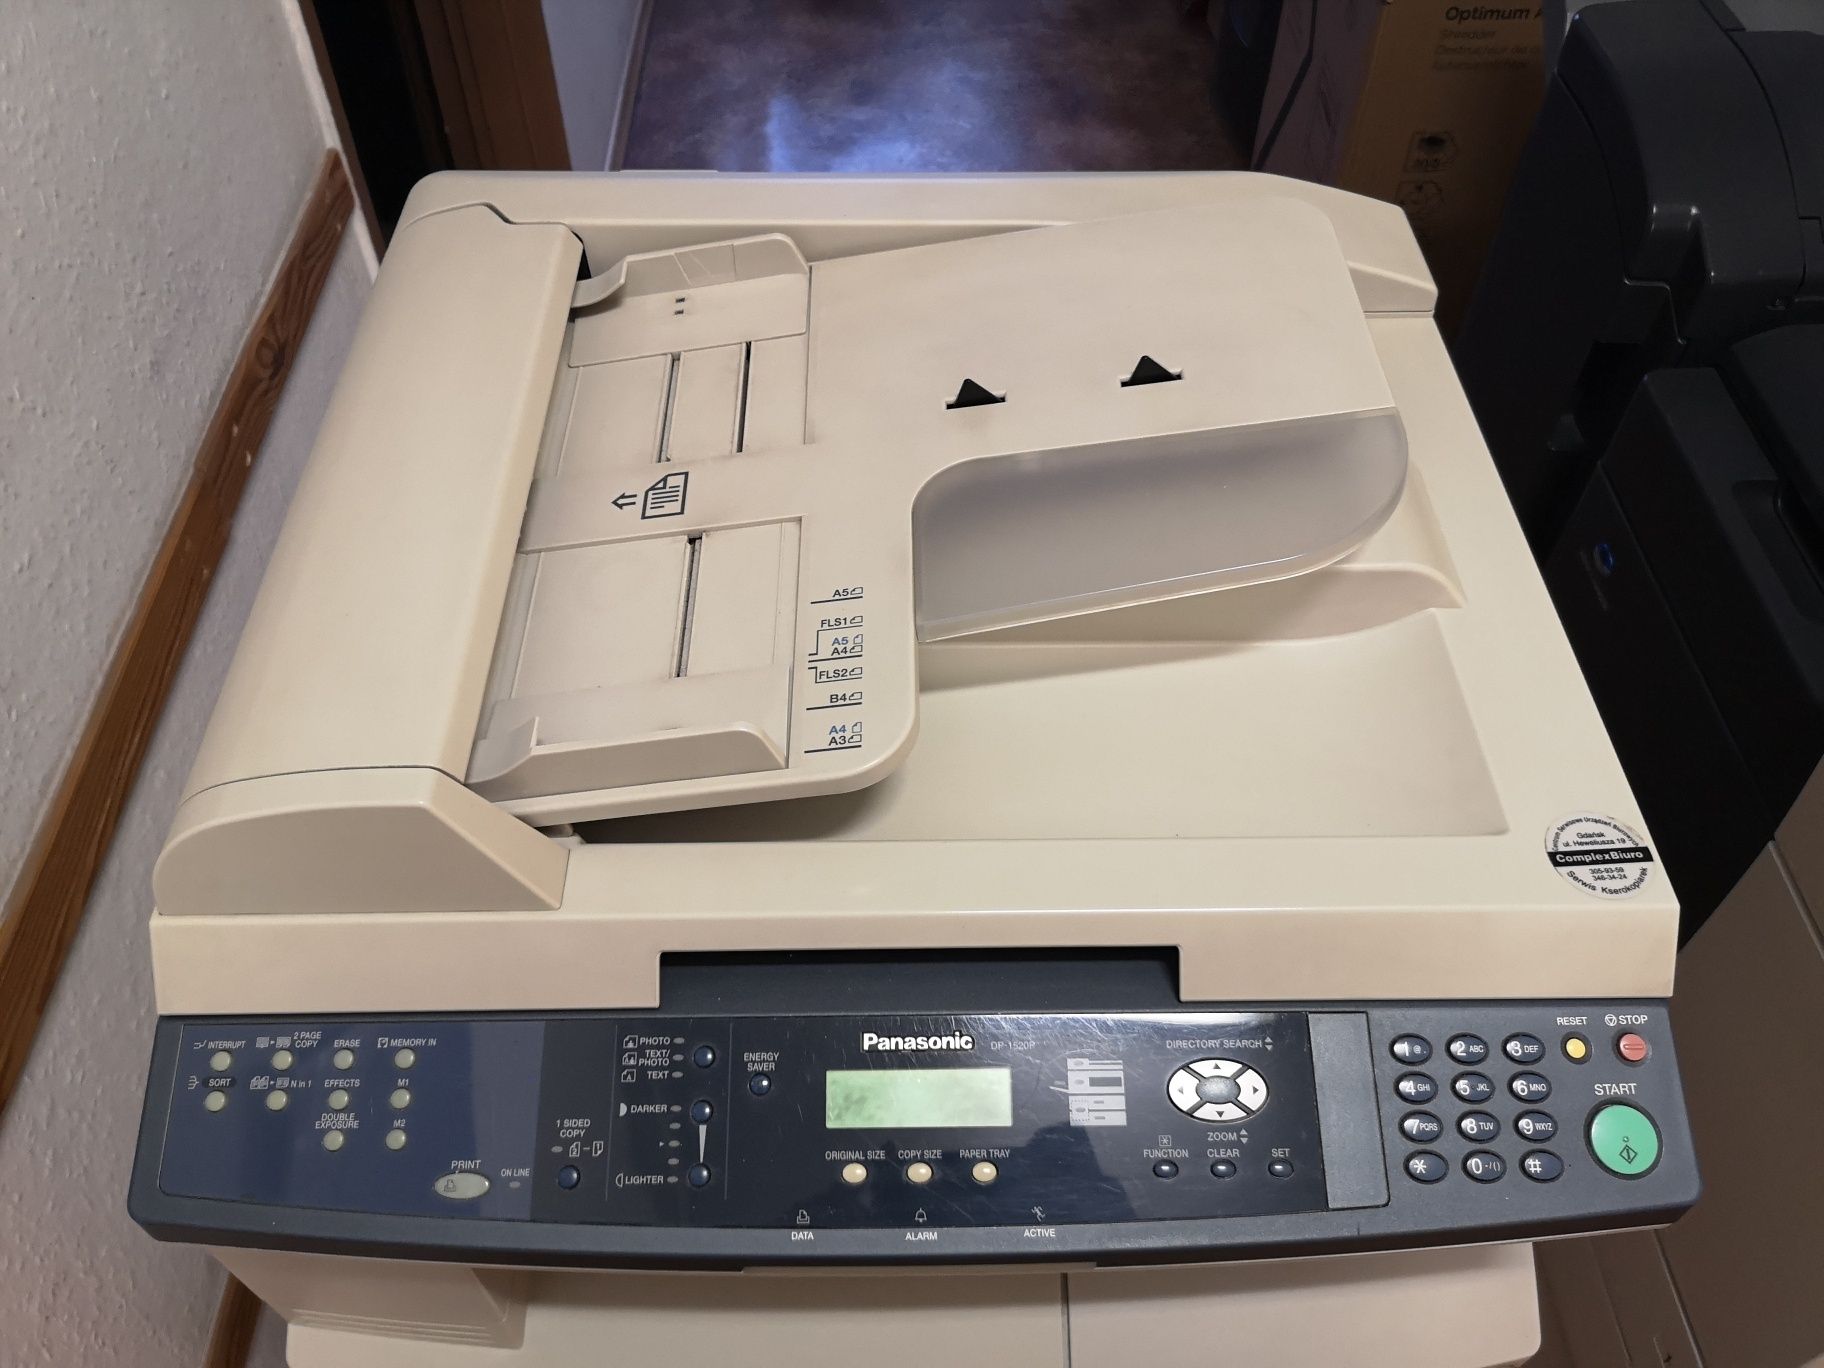 Panasonic DP-1520P ksero xero kserokopiarka drukarka sieciowa A3 A4